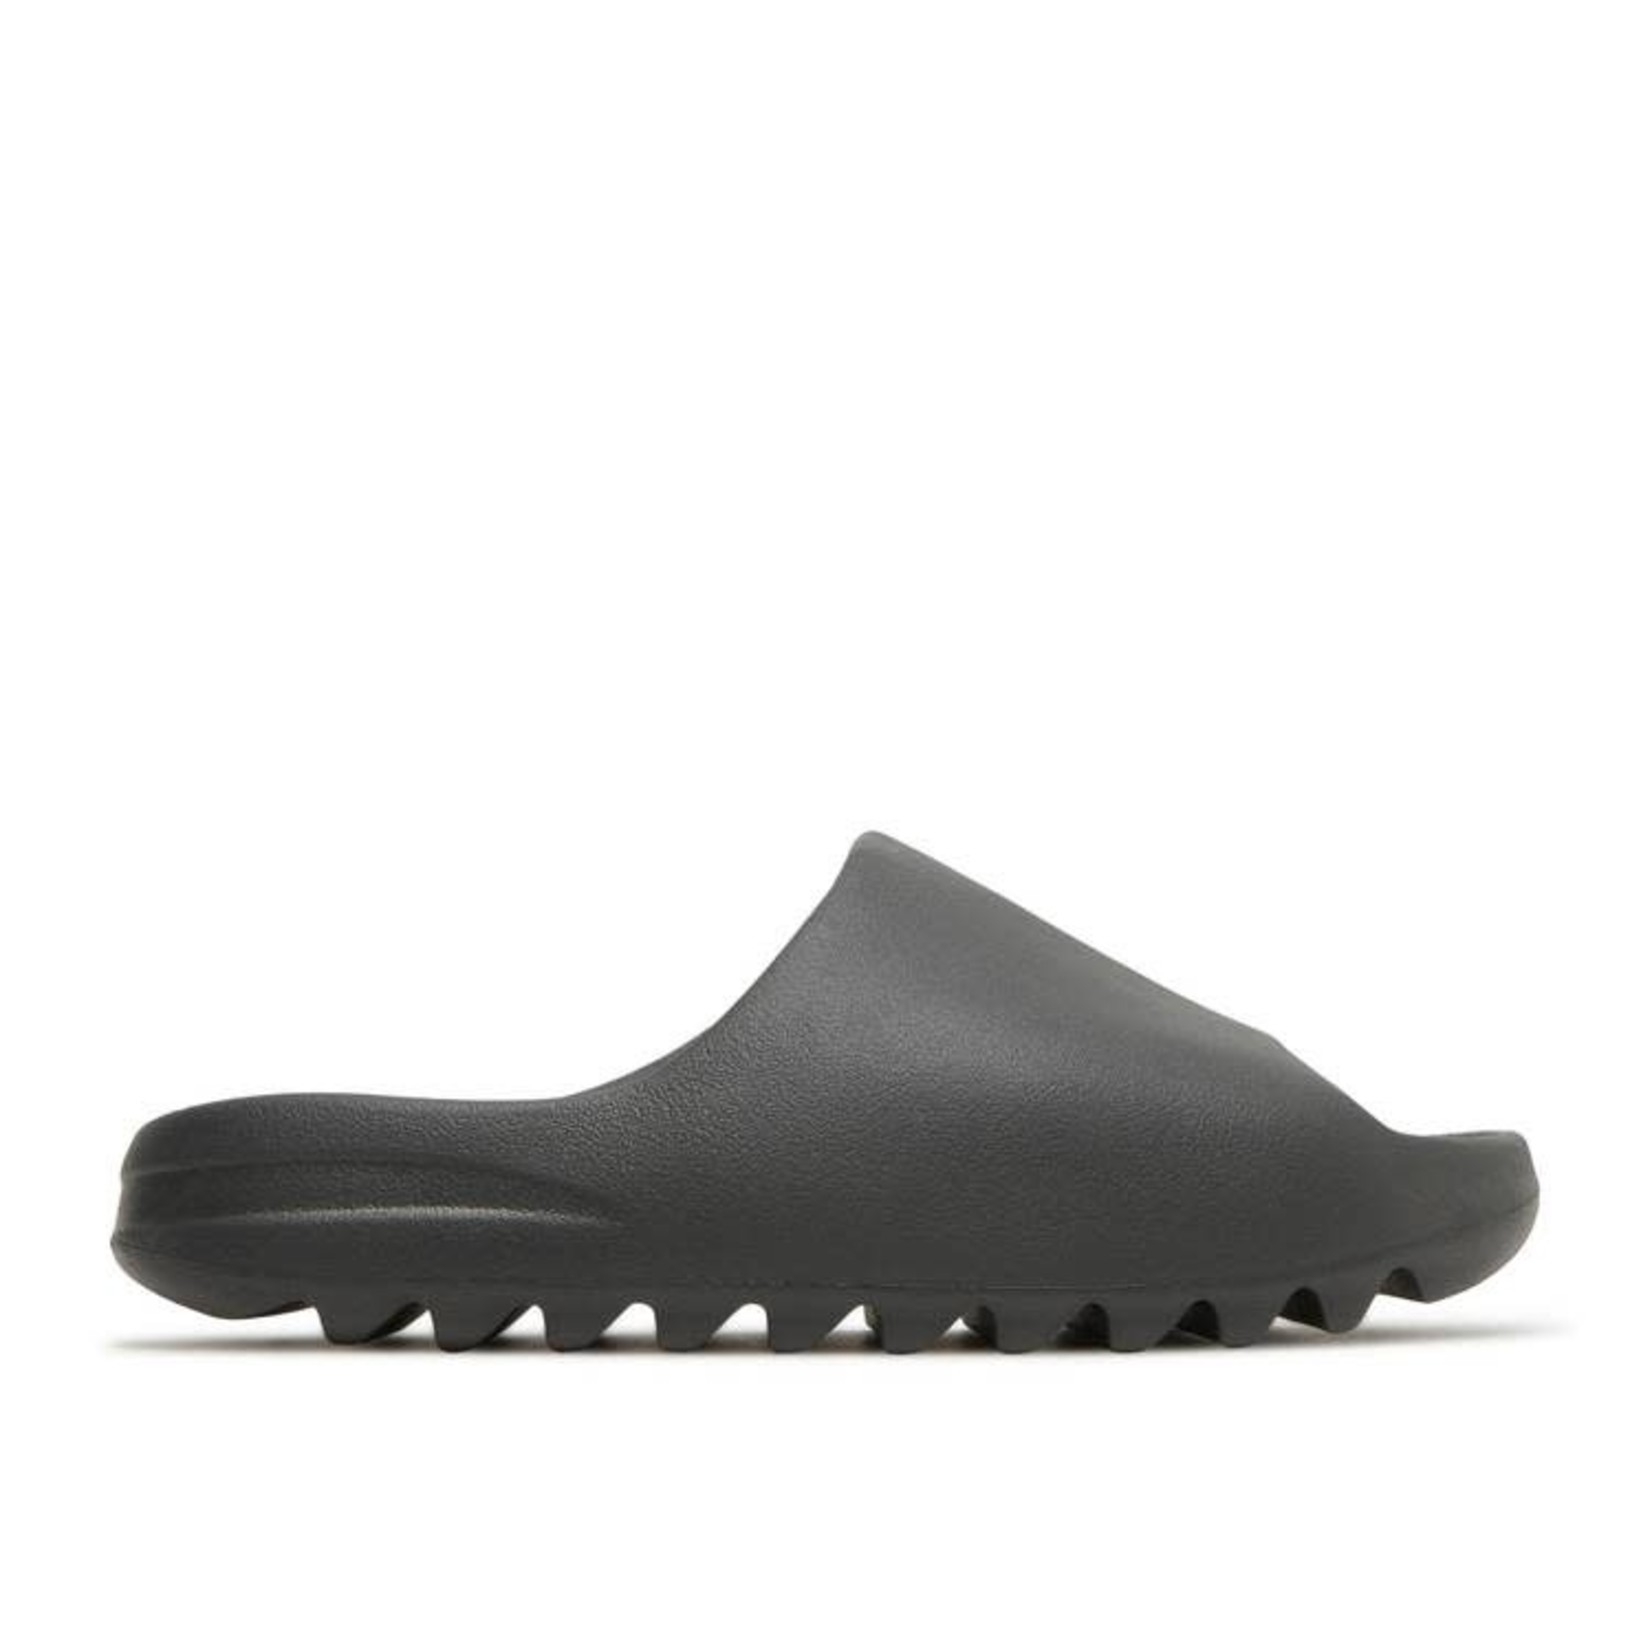 Adidas Adidas Yeezy Slide Onyx Size 7, DS BRAND NEW - SoleSeattle